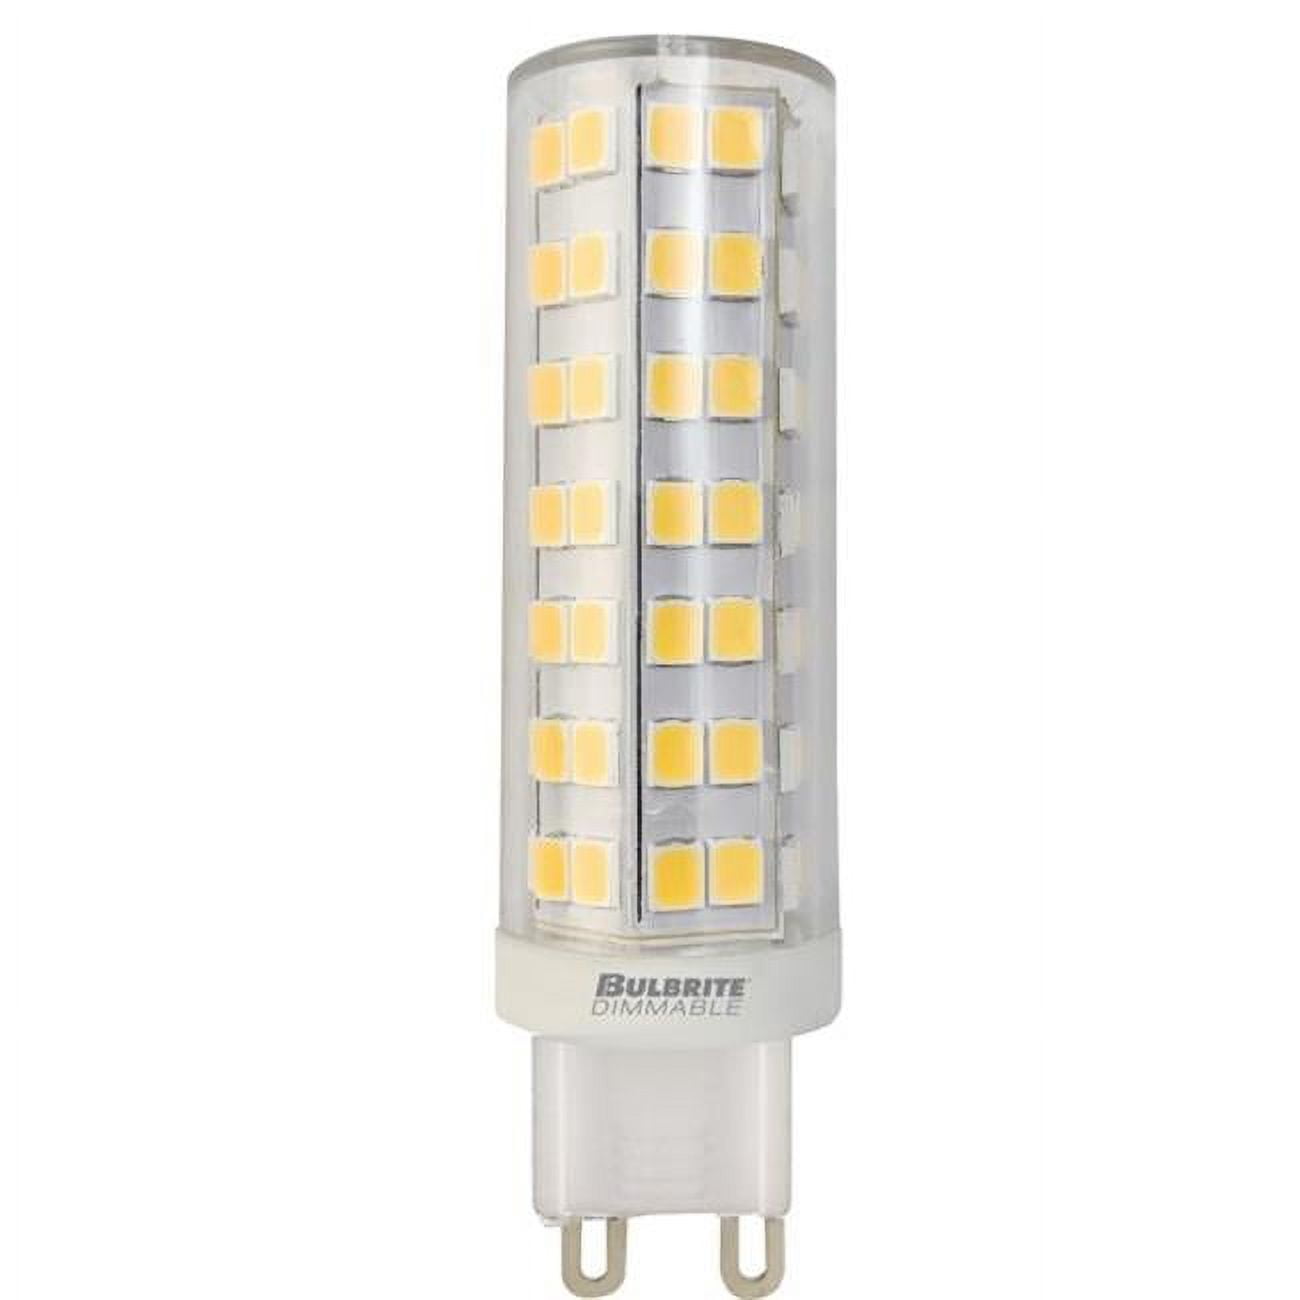 Picture of Bulbrite Pack of (2) 6.5 Watt 120V Dimmable Clear T6 LED Mini Light Bulbs with Bi-Pin (G9) Base  2700K Warm White Light  700 Lumens